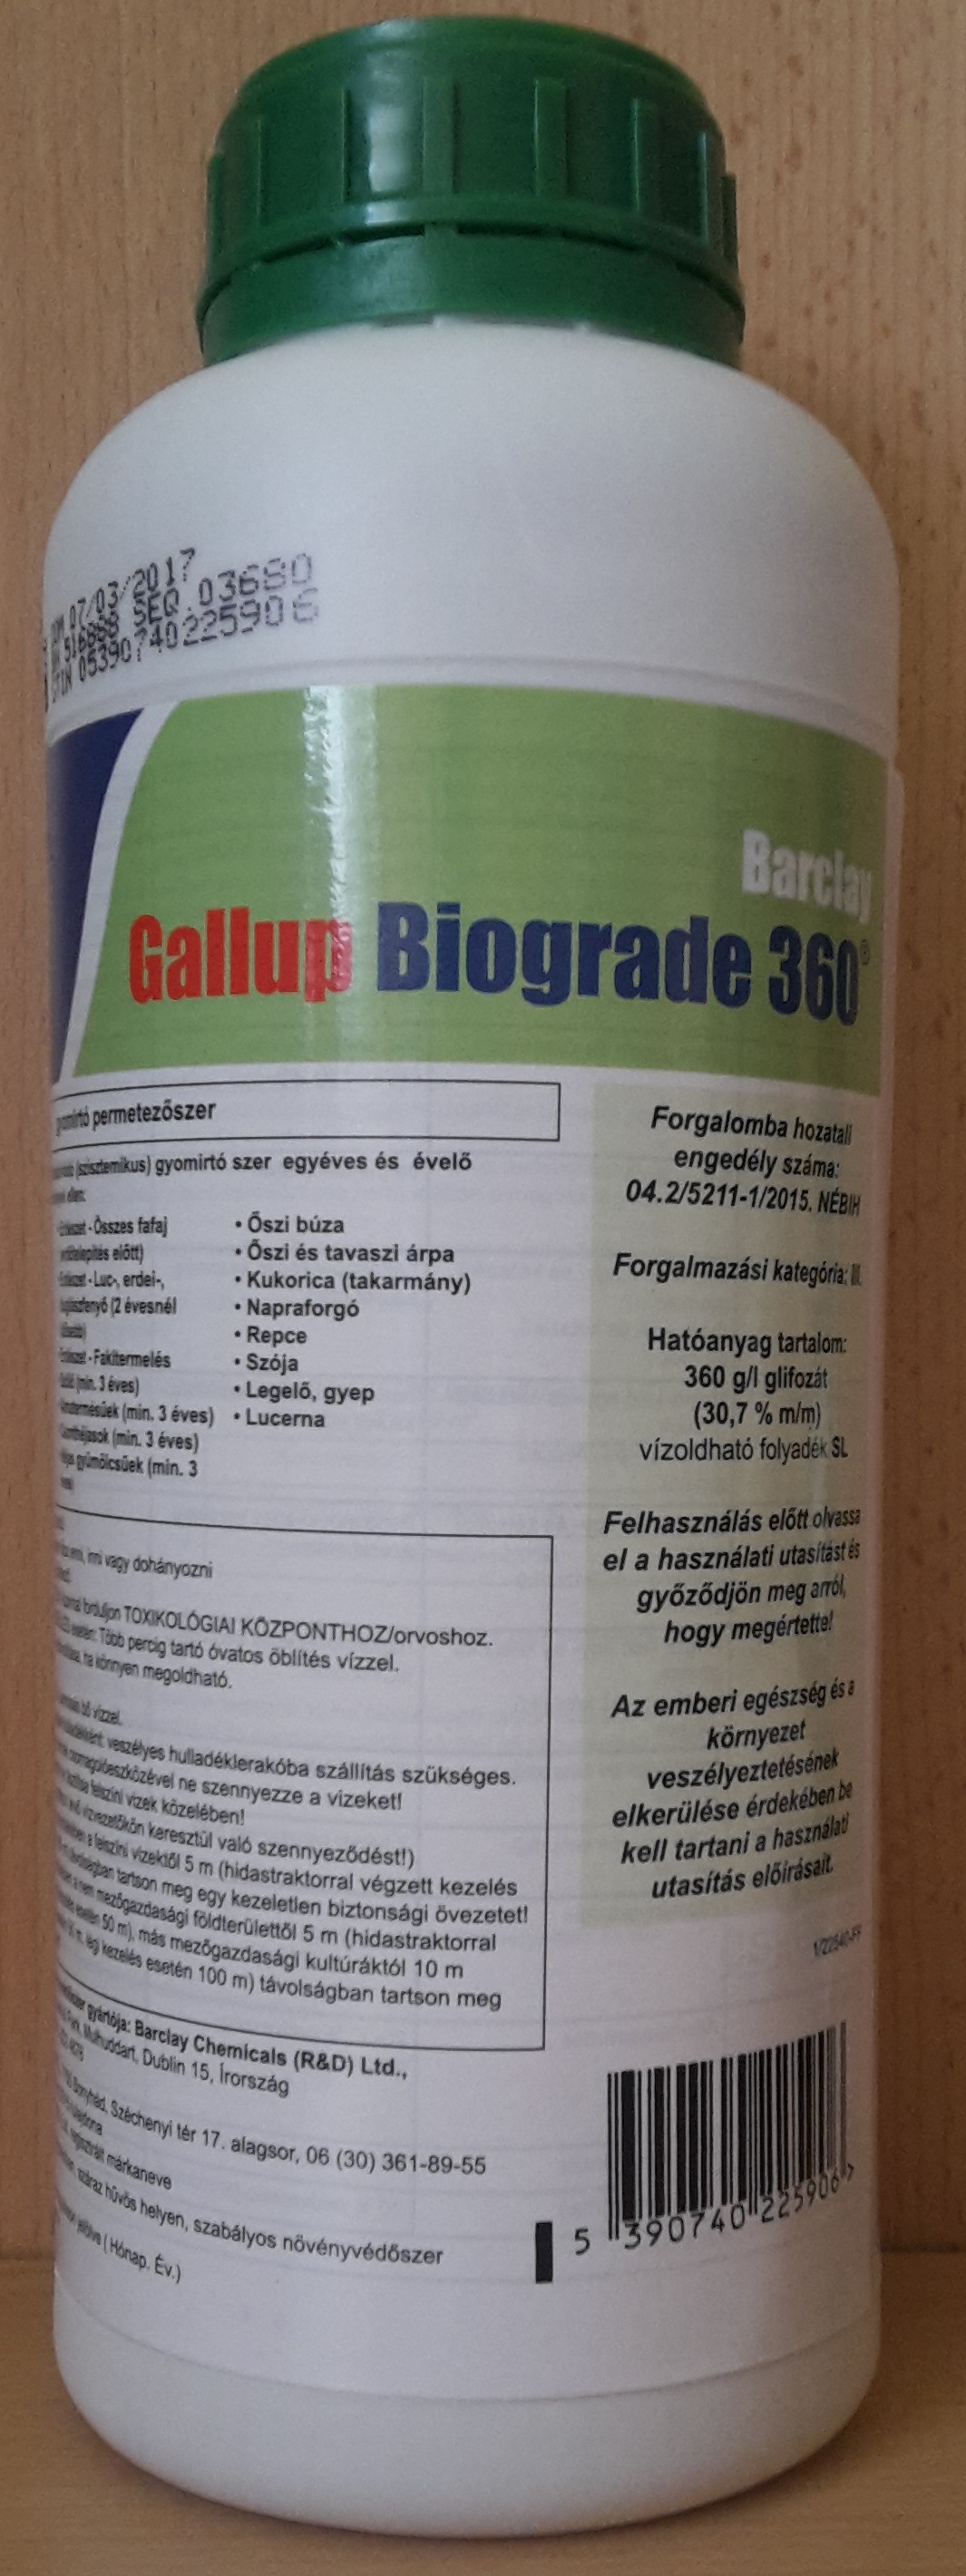 Barclay Gallup Biograde 1 l